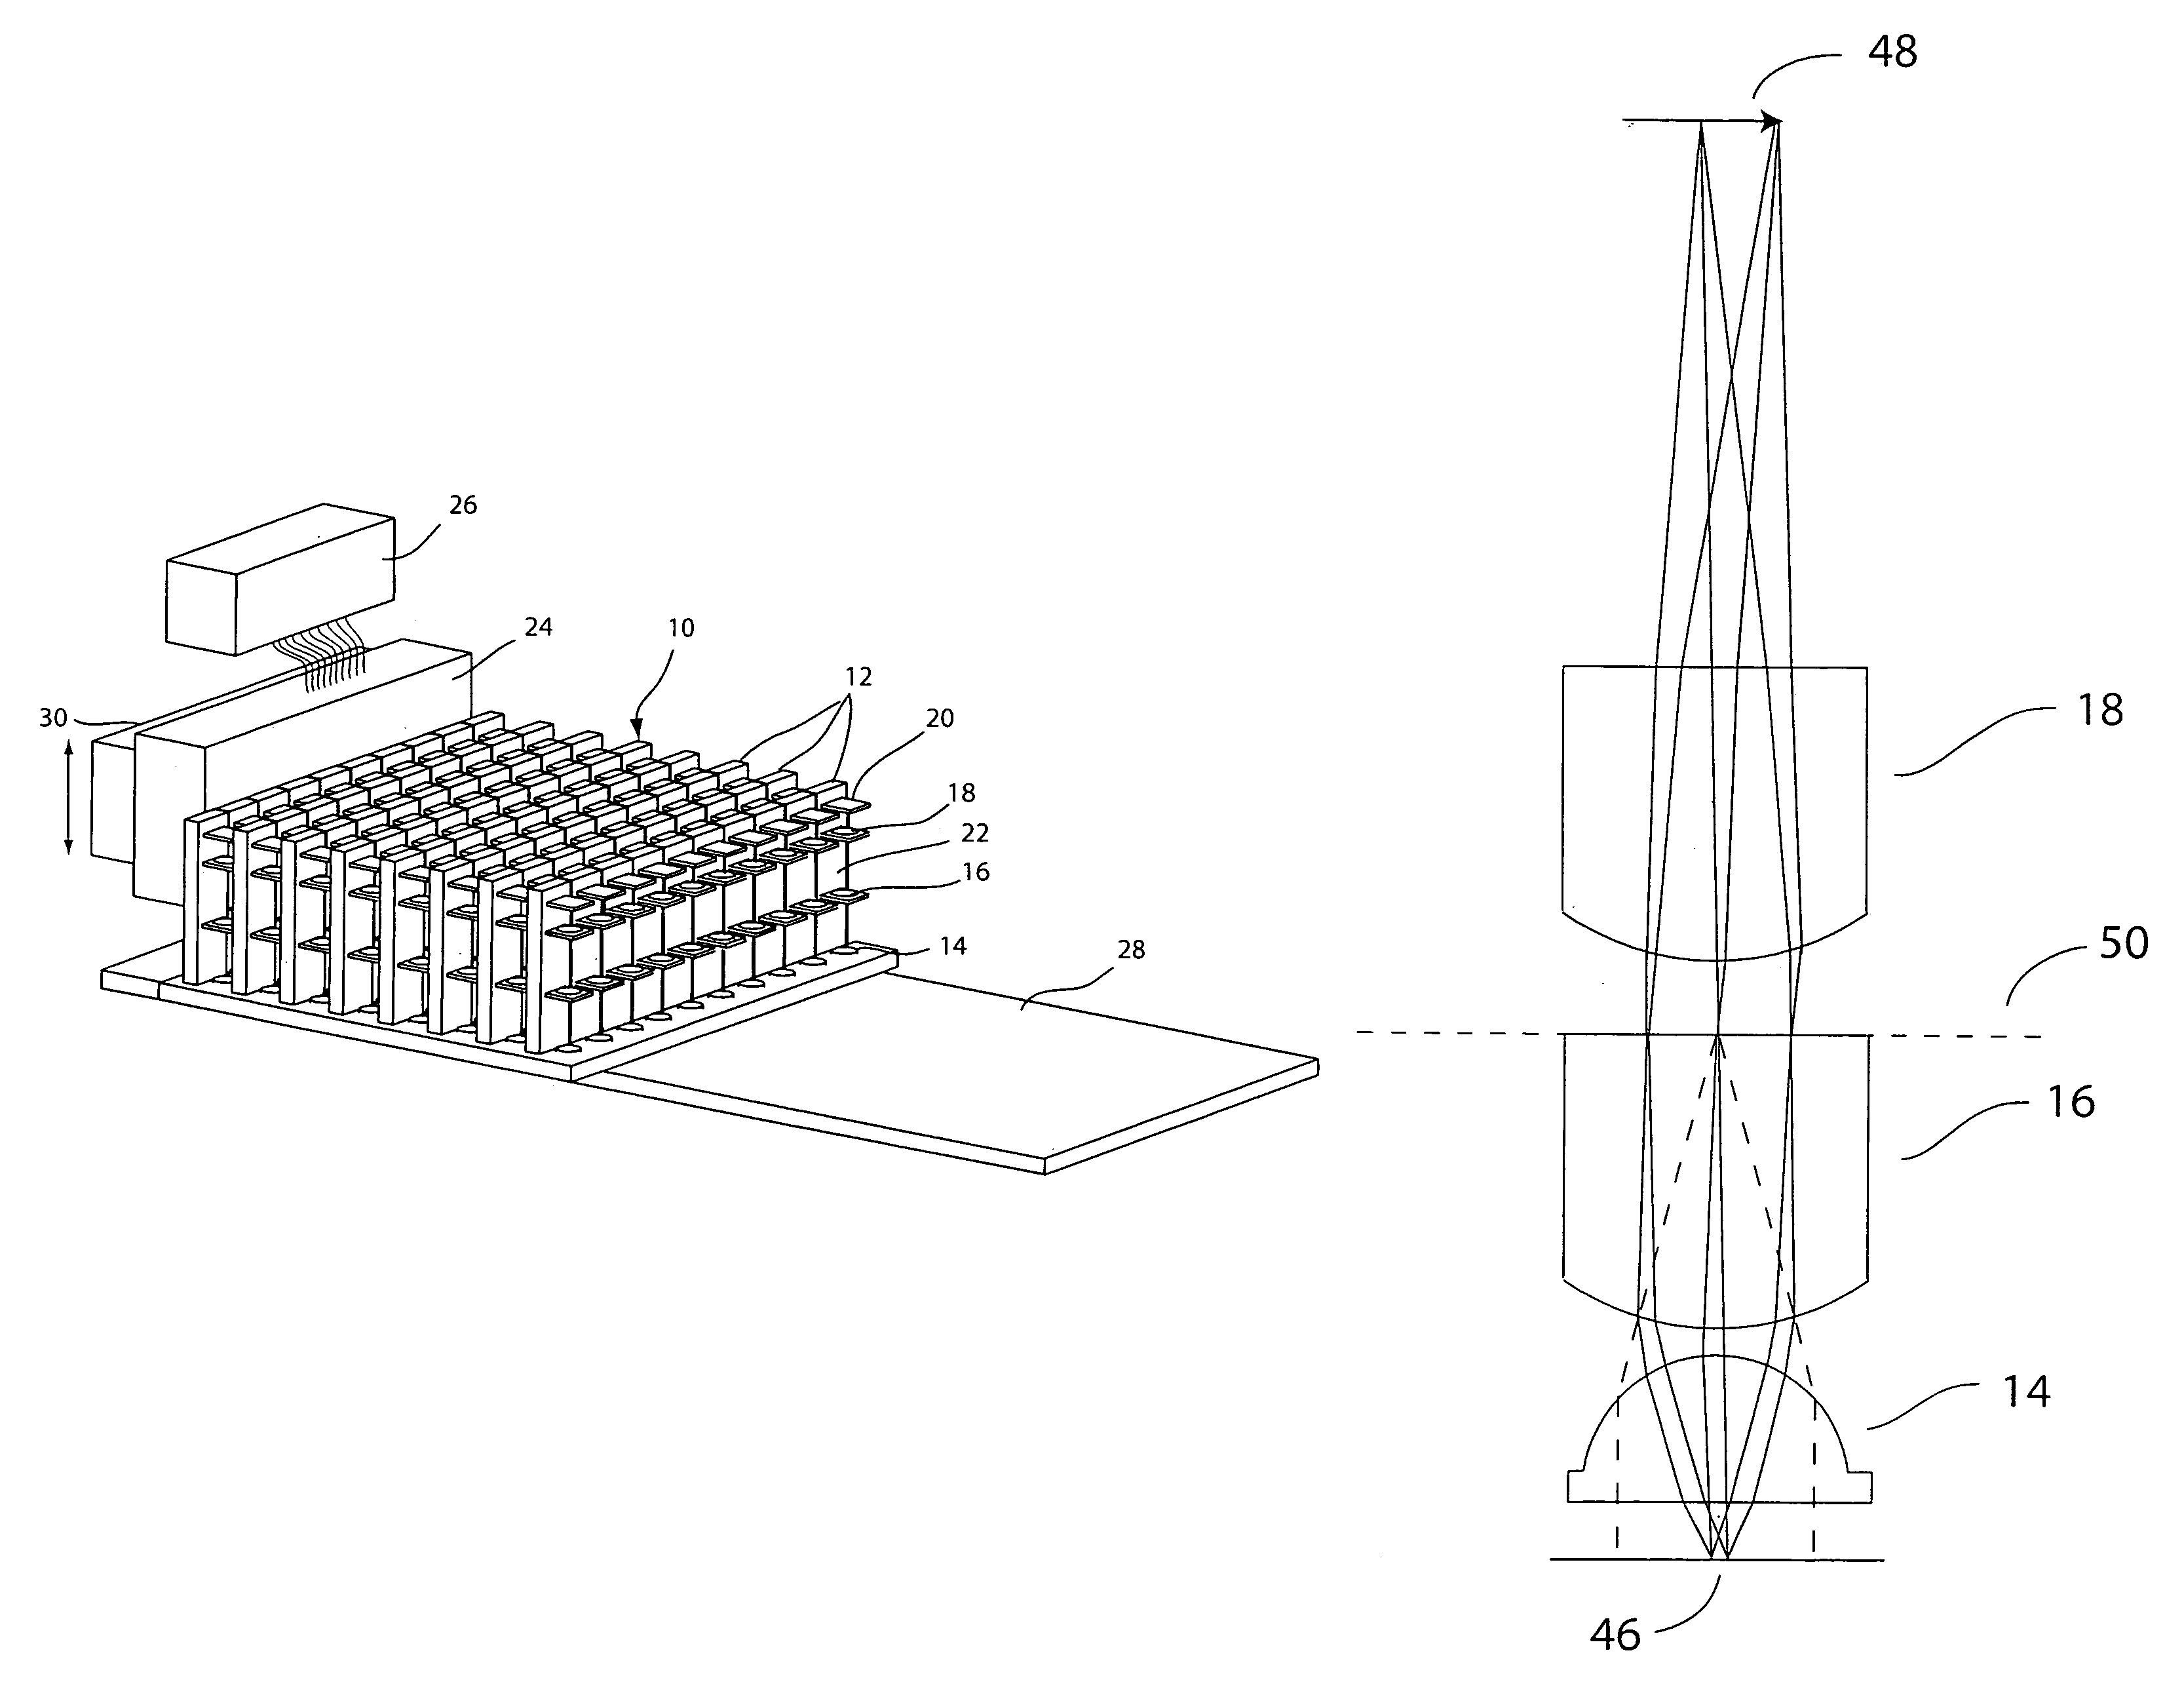 EPI-illumination system for an array microscope